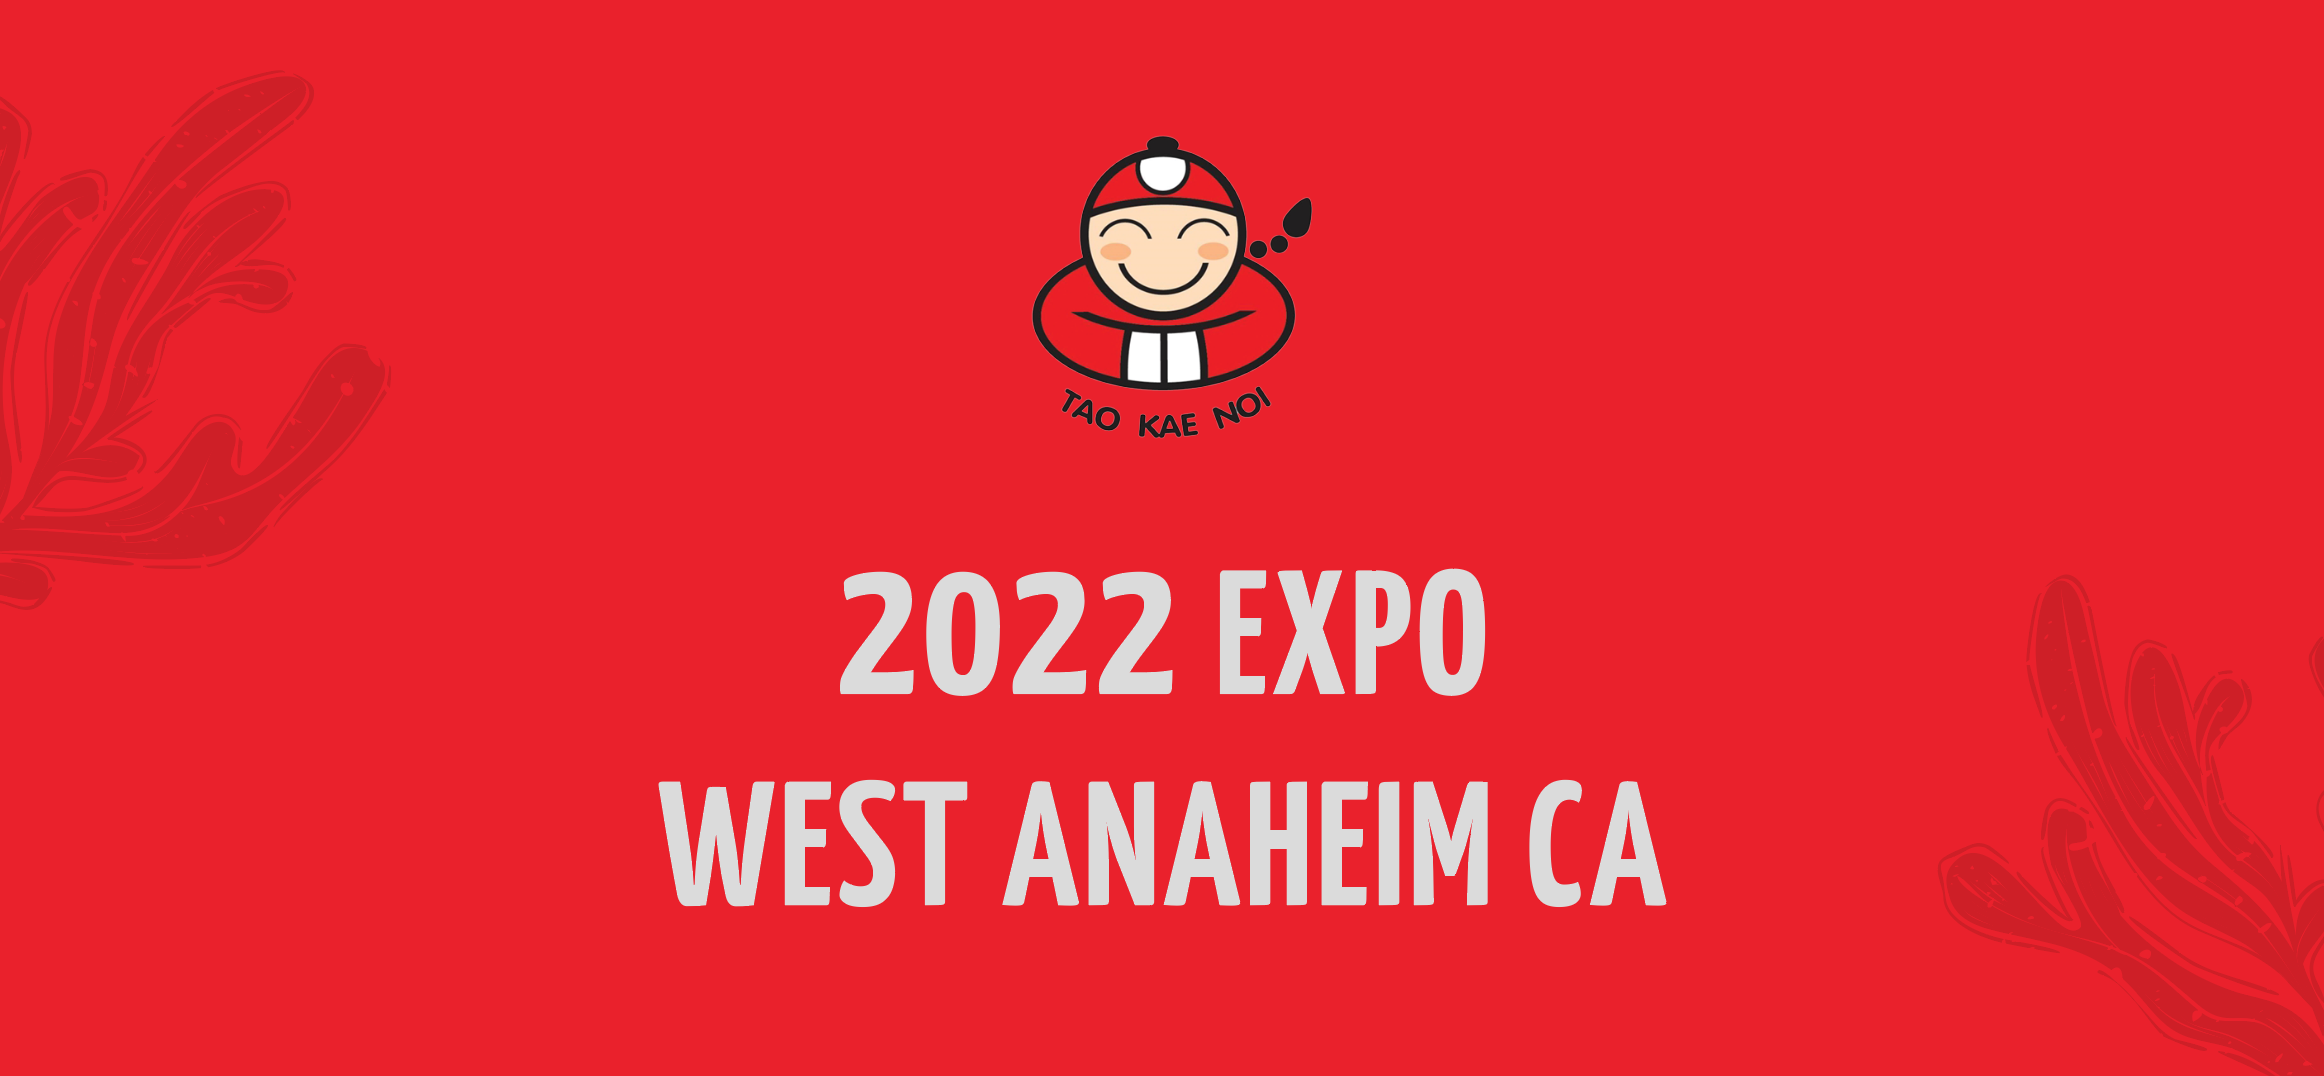 2022 Expo West Anaheim CA Taokaenoi Global